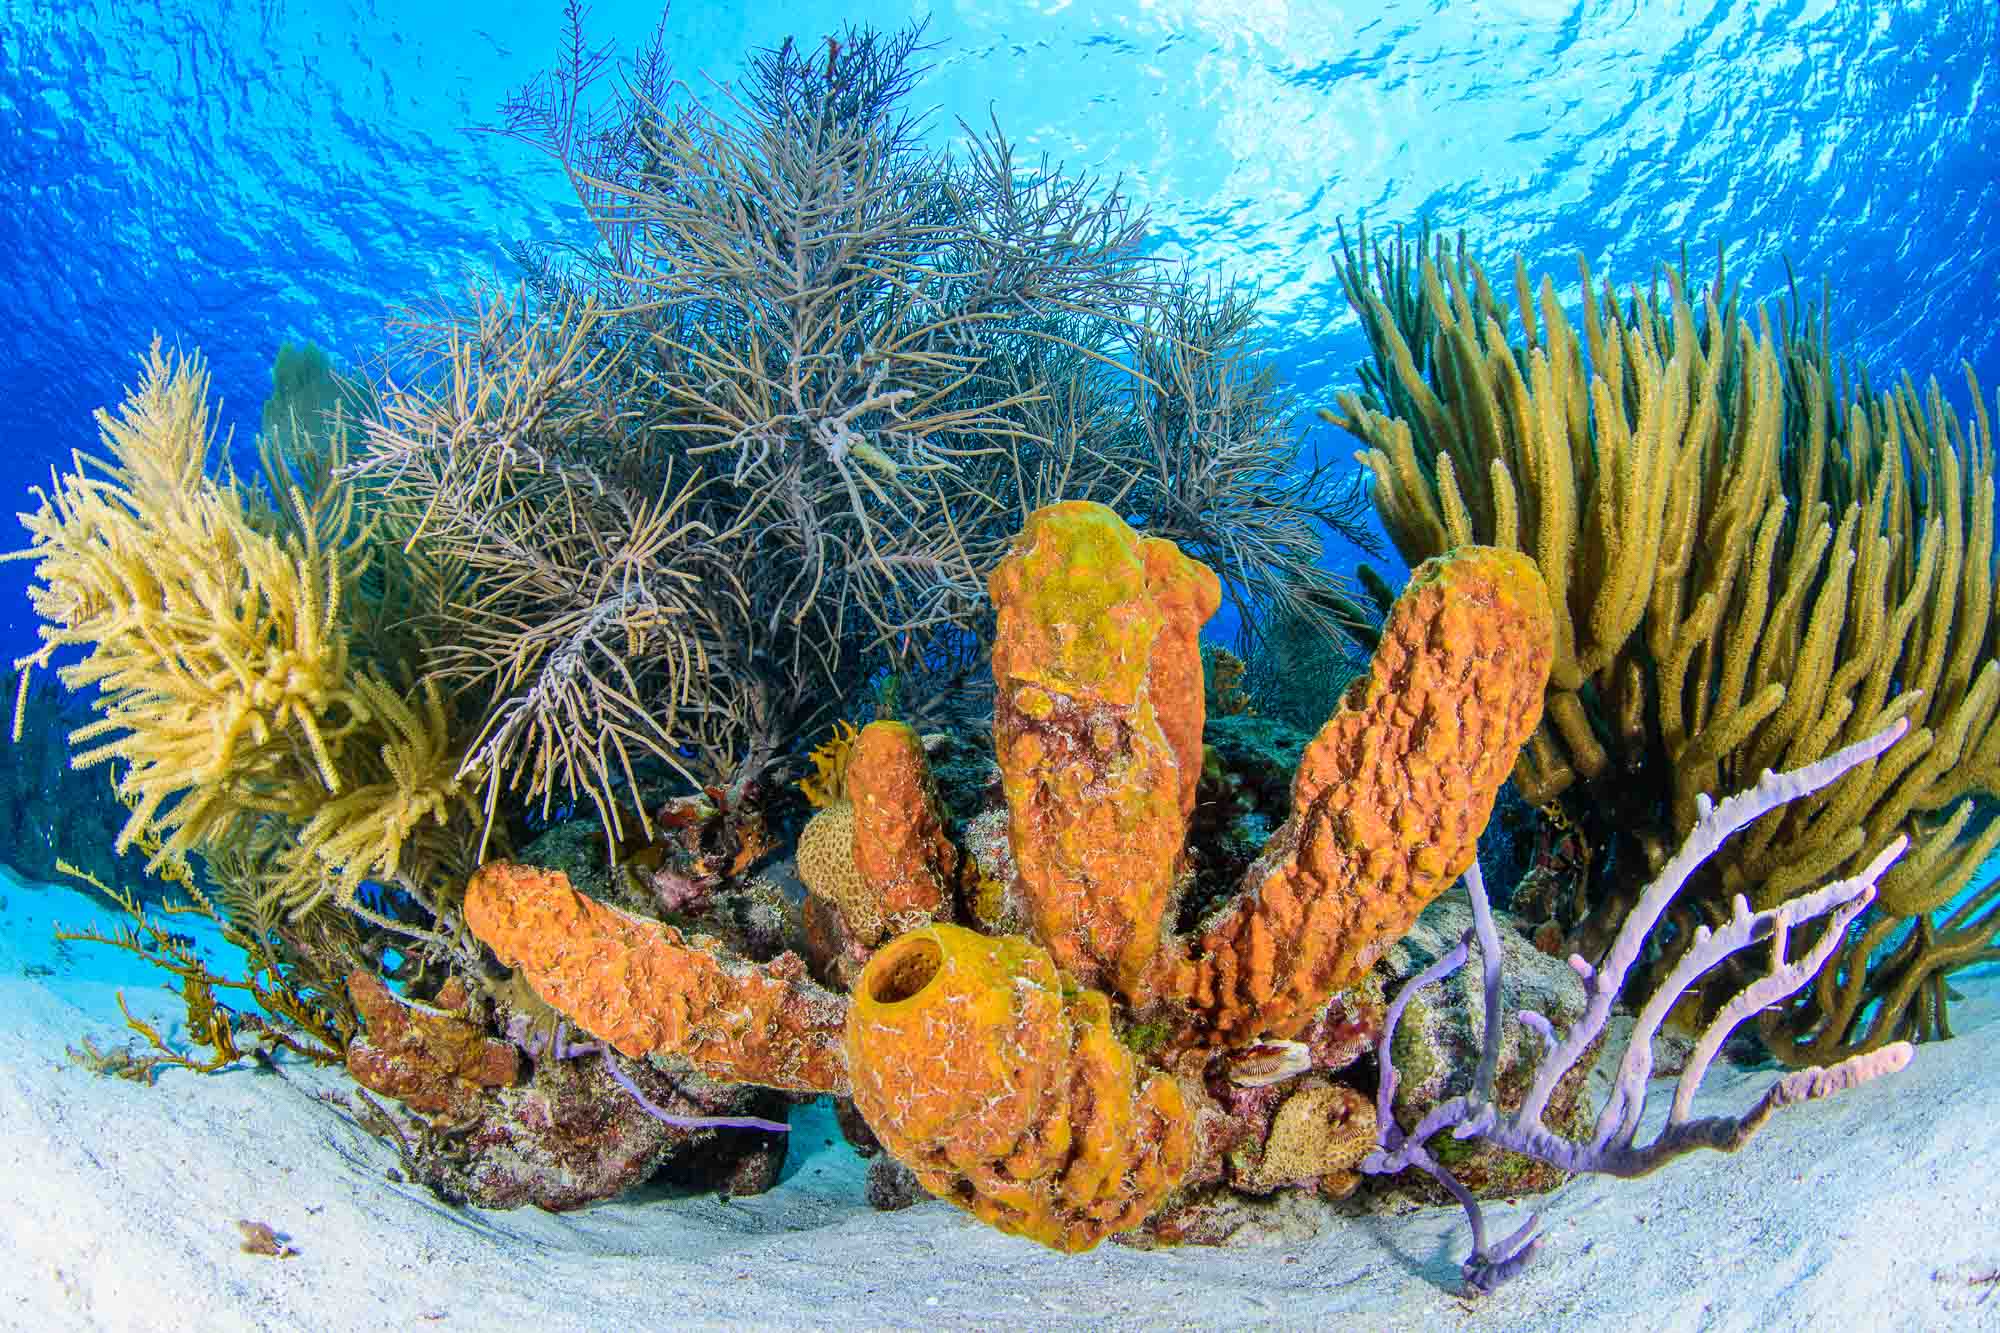 Underwater Life -Boca de Cote - Los Roques Venezuela - National Park